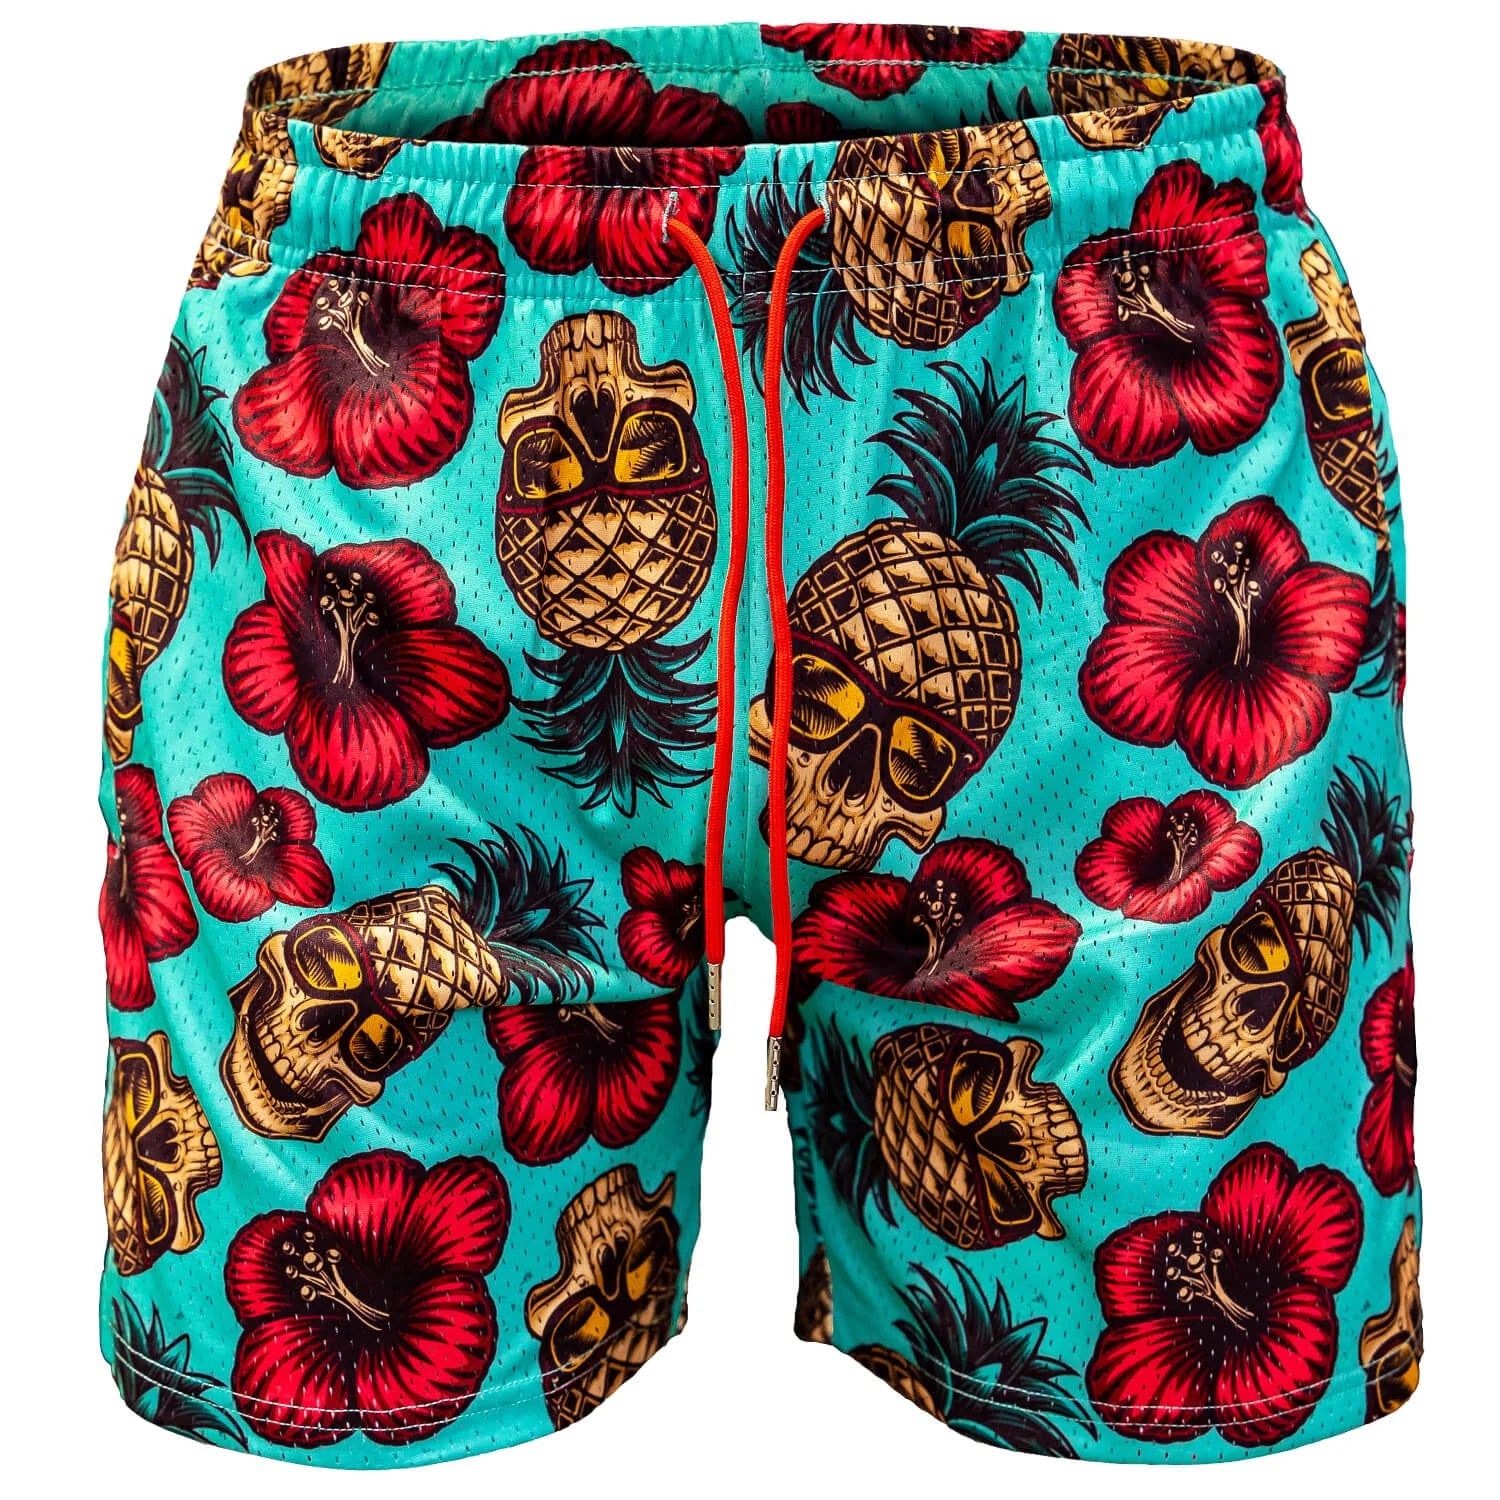 Mesh Lifestyle Shorts - Pineapple Express